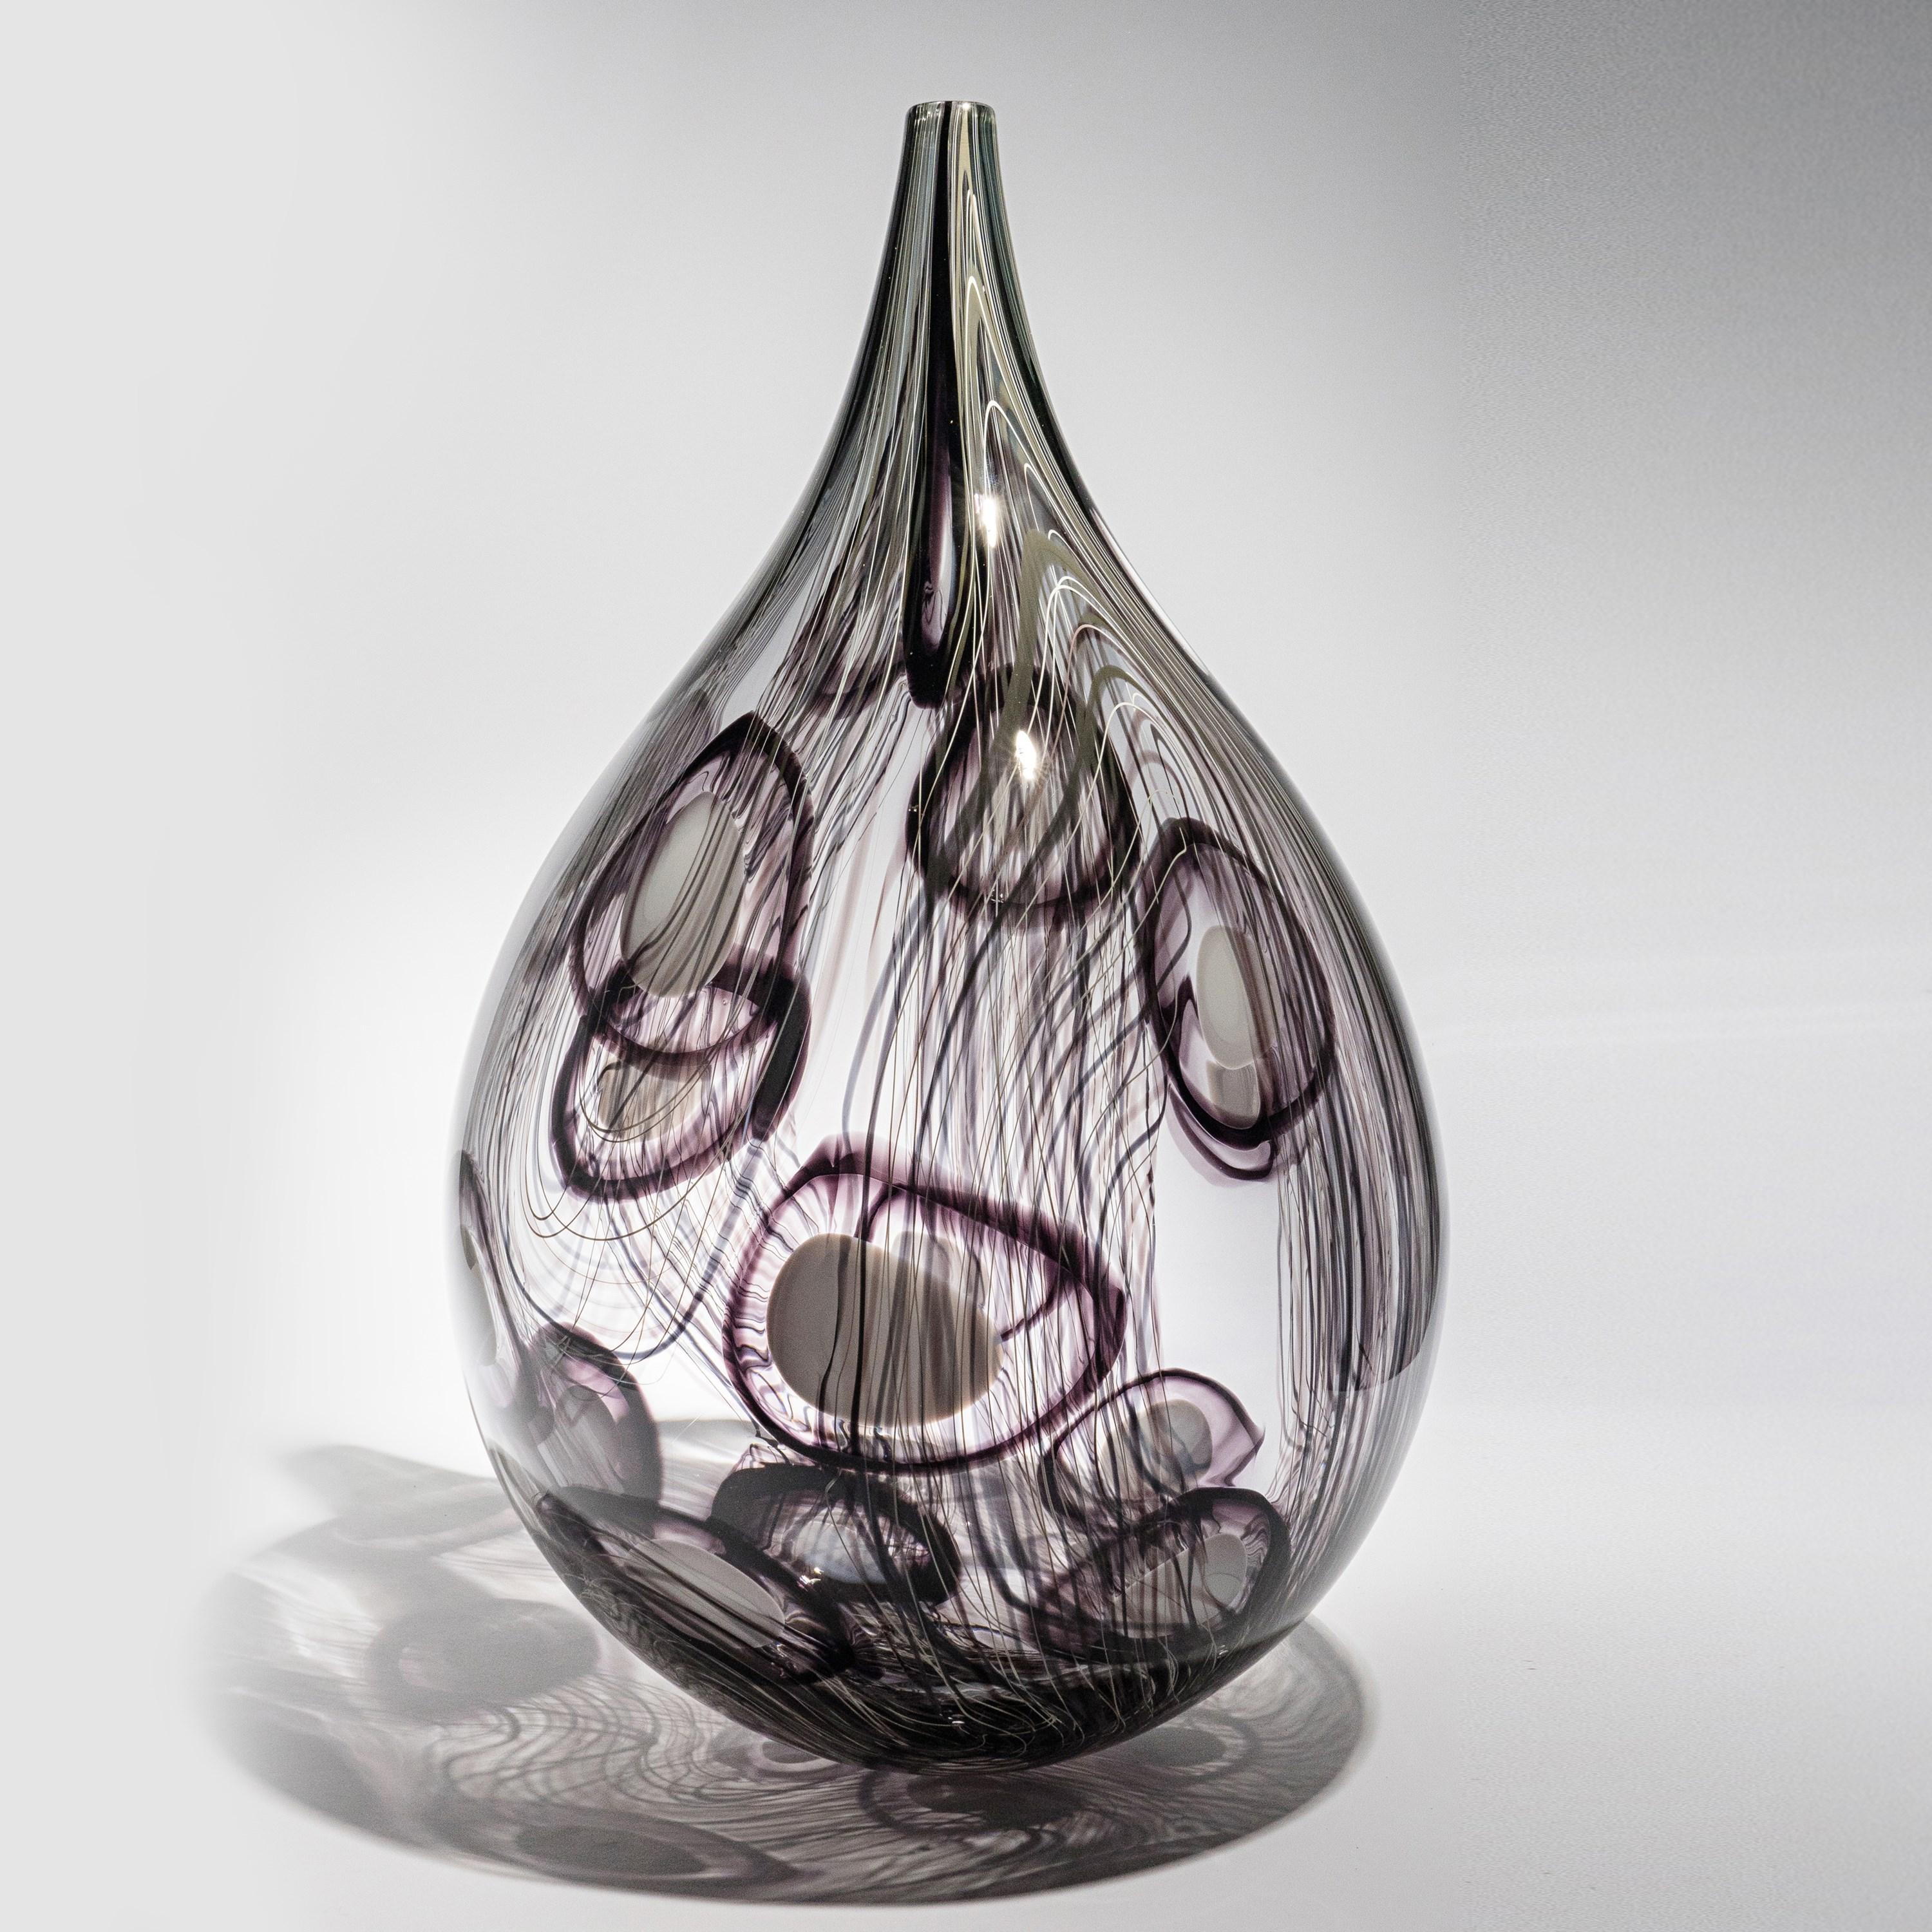 Organic Modern Rings iv, a Black / Aubergine & Clear Sculptural Glass Vessel by Ann Wåhlström For Sale